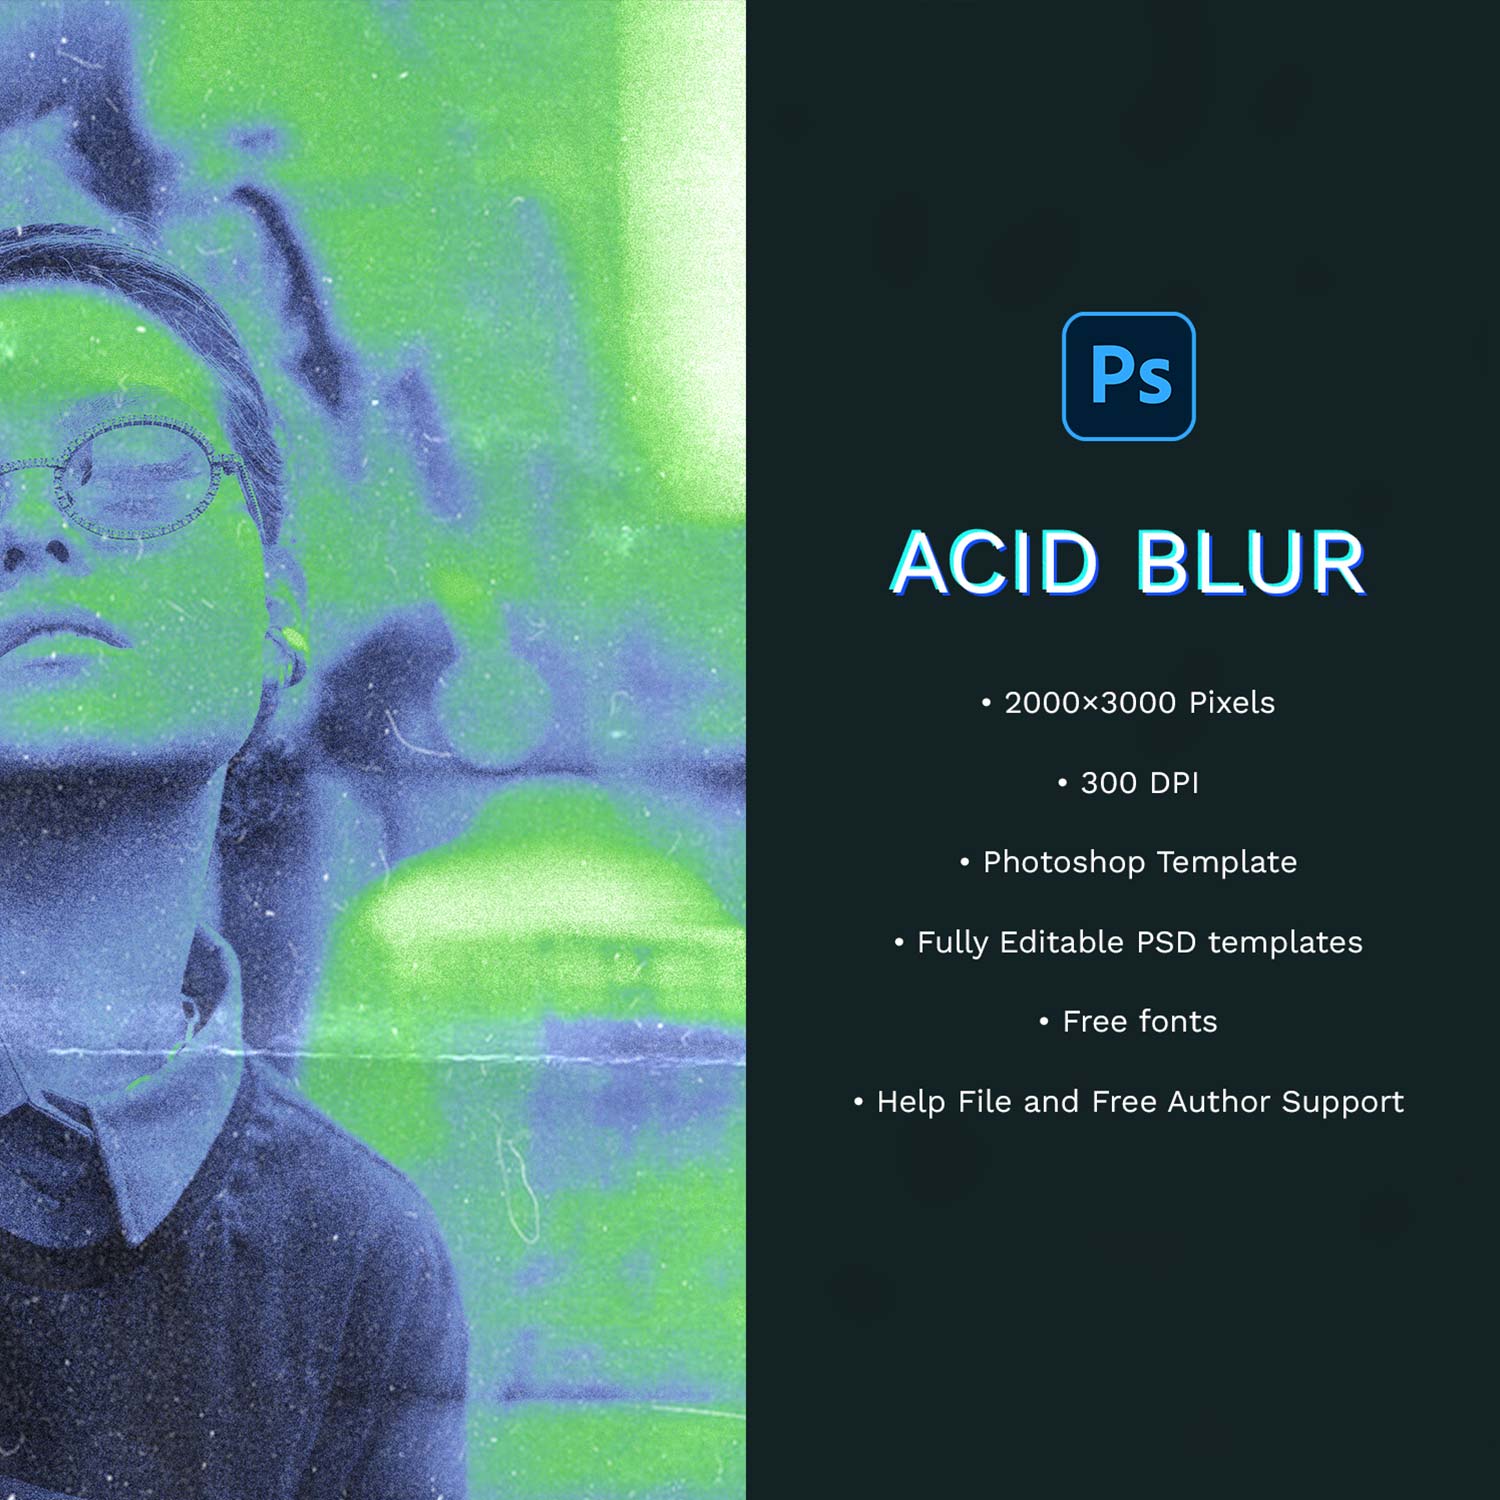 Acid Blur Photo Effect preview image.